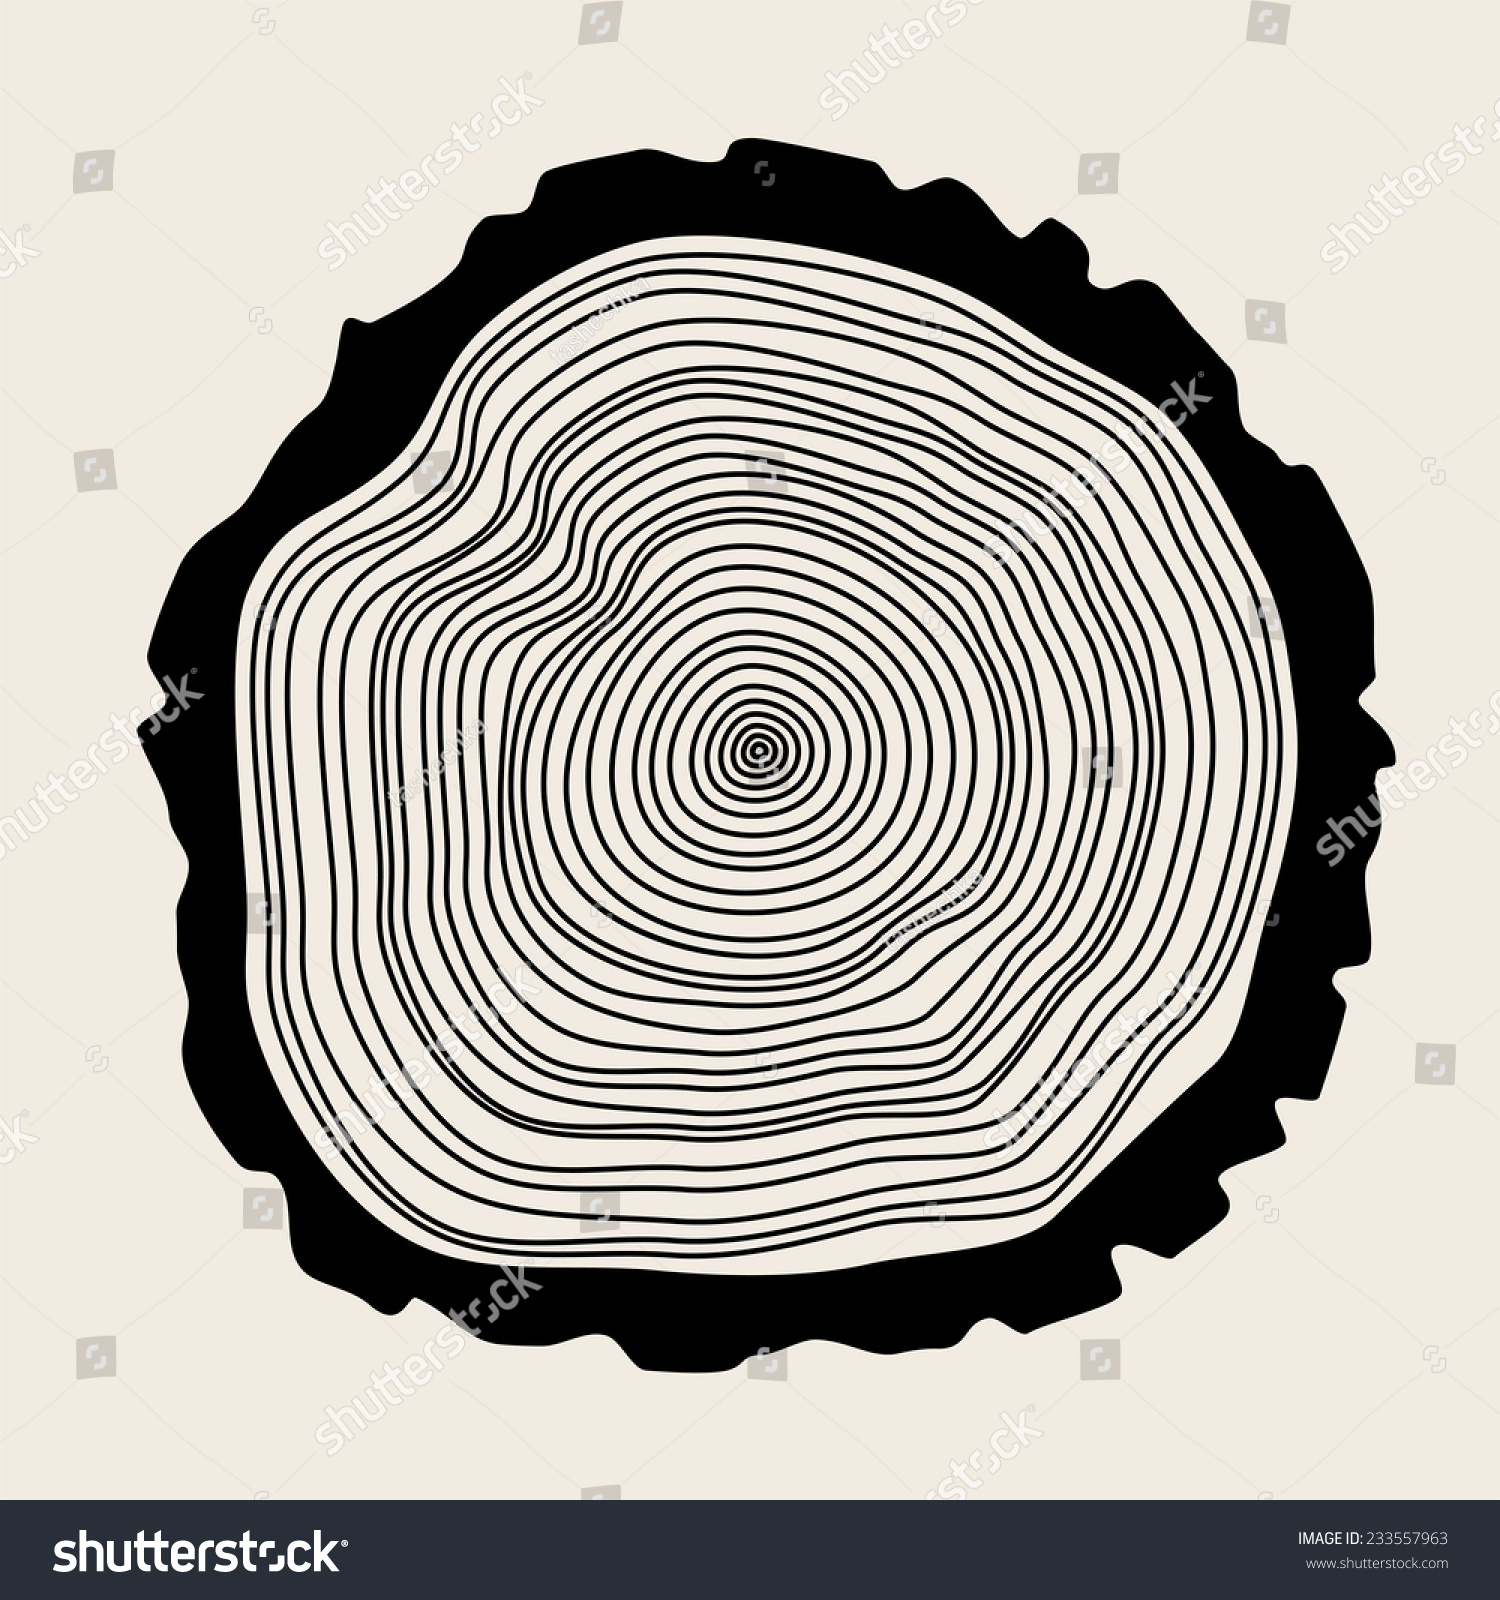 clipart tree rings - photo #11